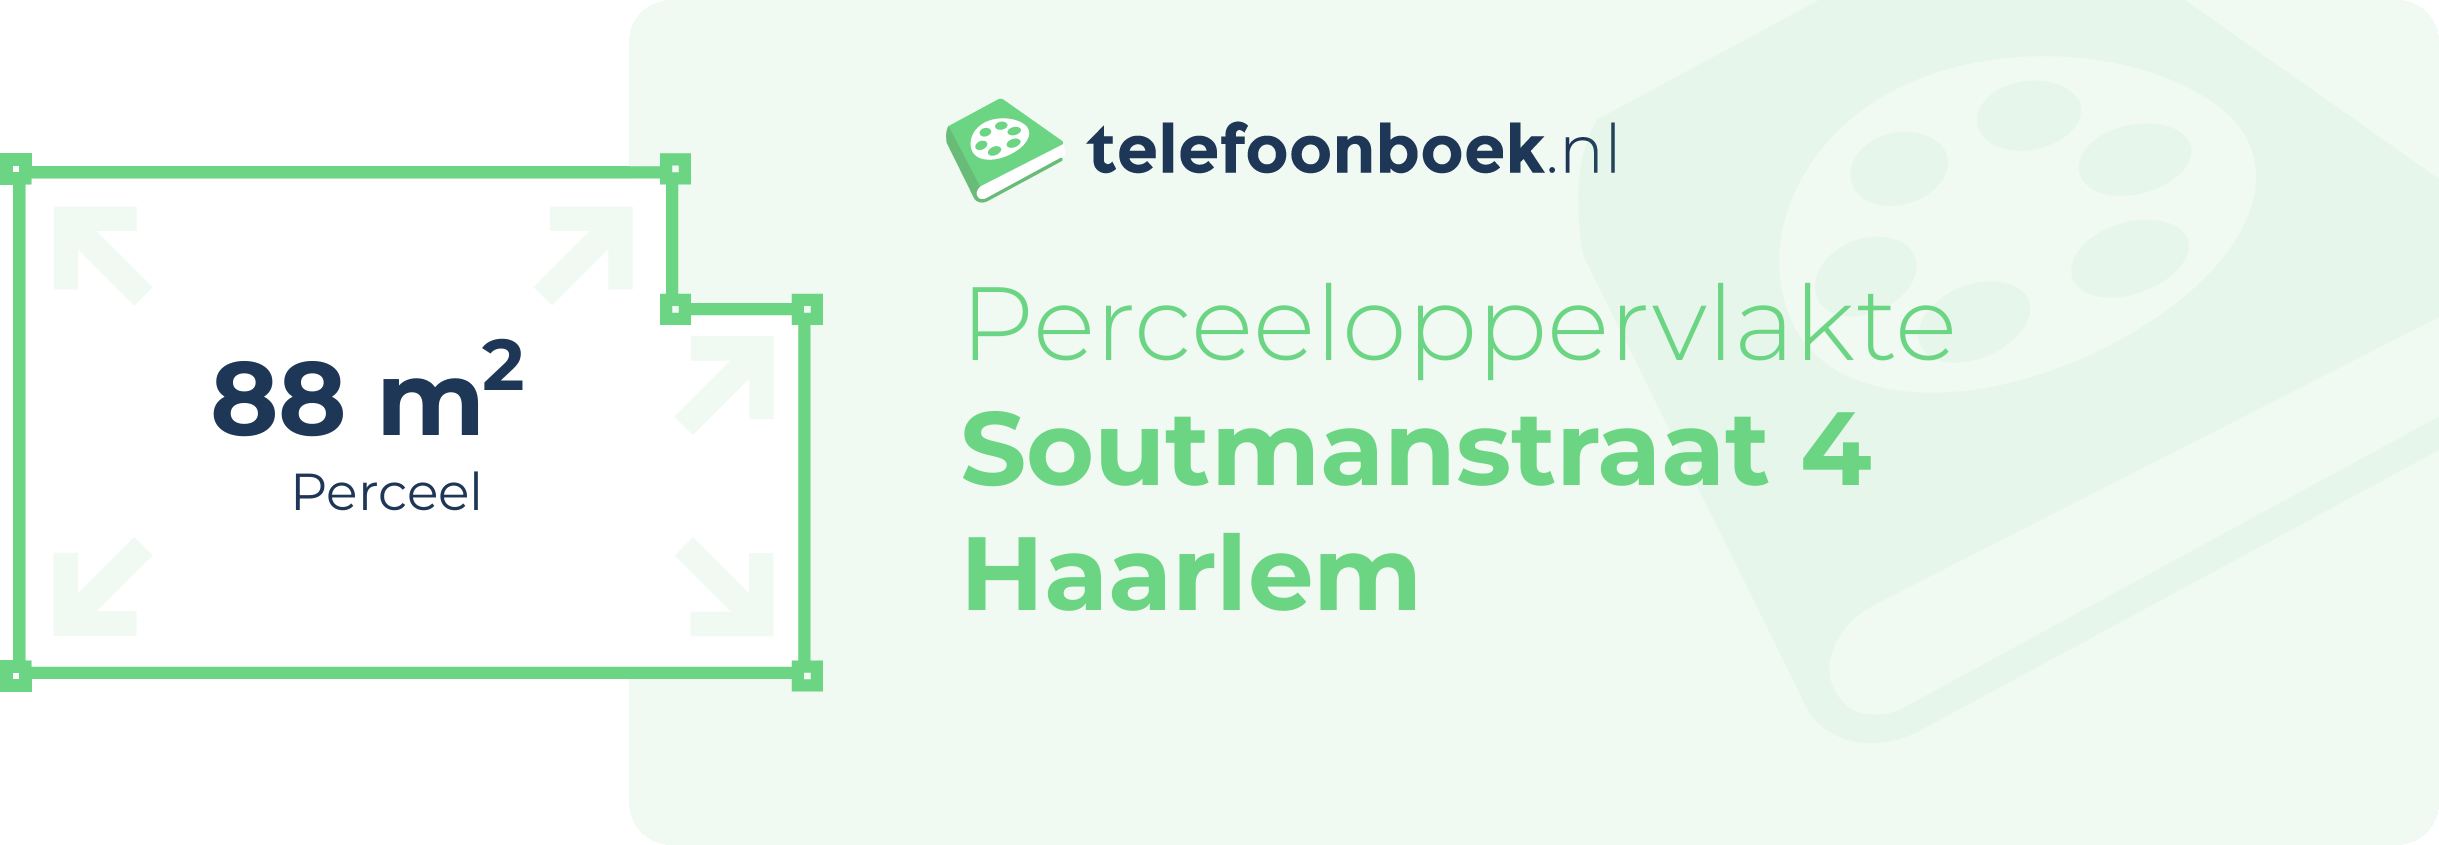 Perceeloppervlakte Soutmanstraat 4 Haarlem